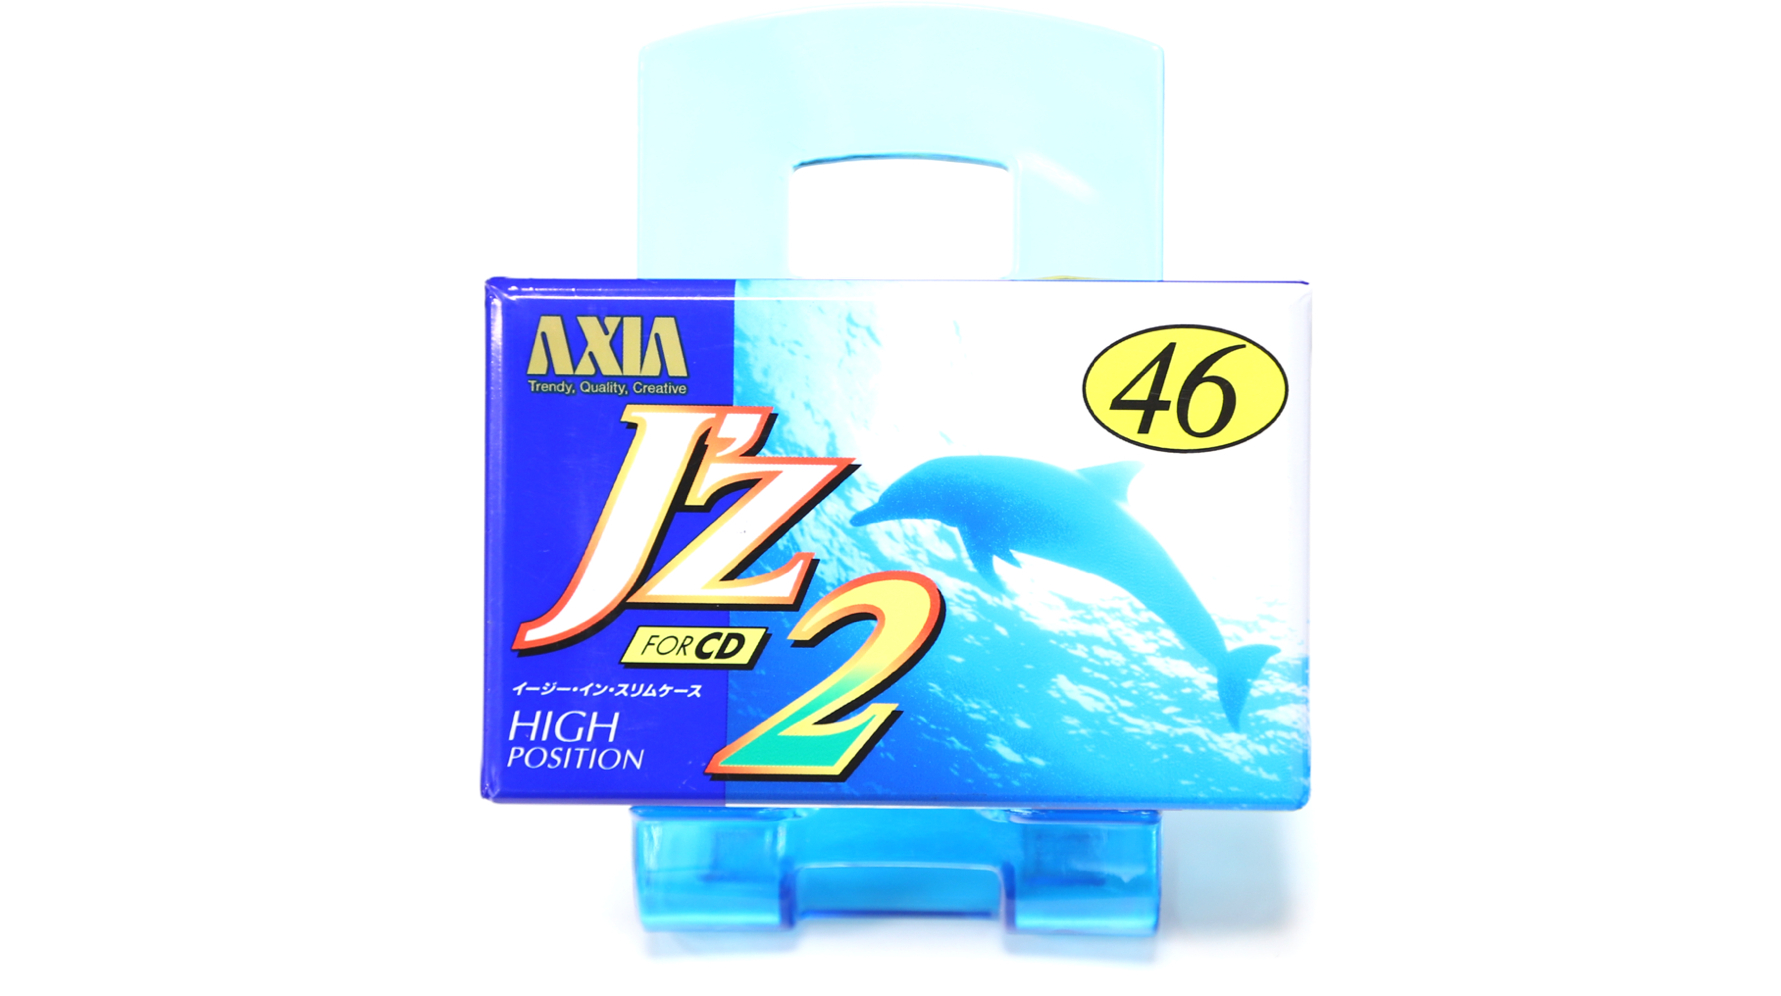 AXIA J'z2-46 Japan